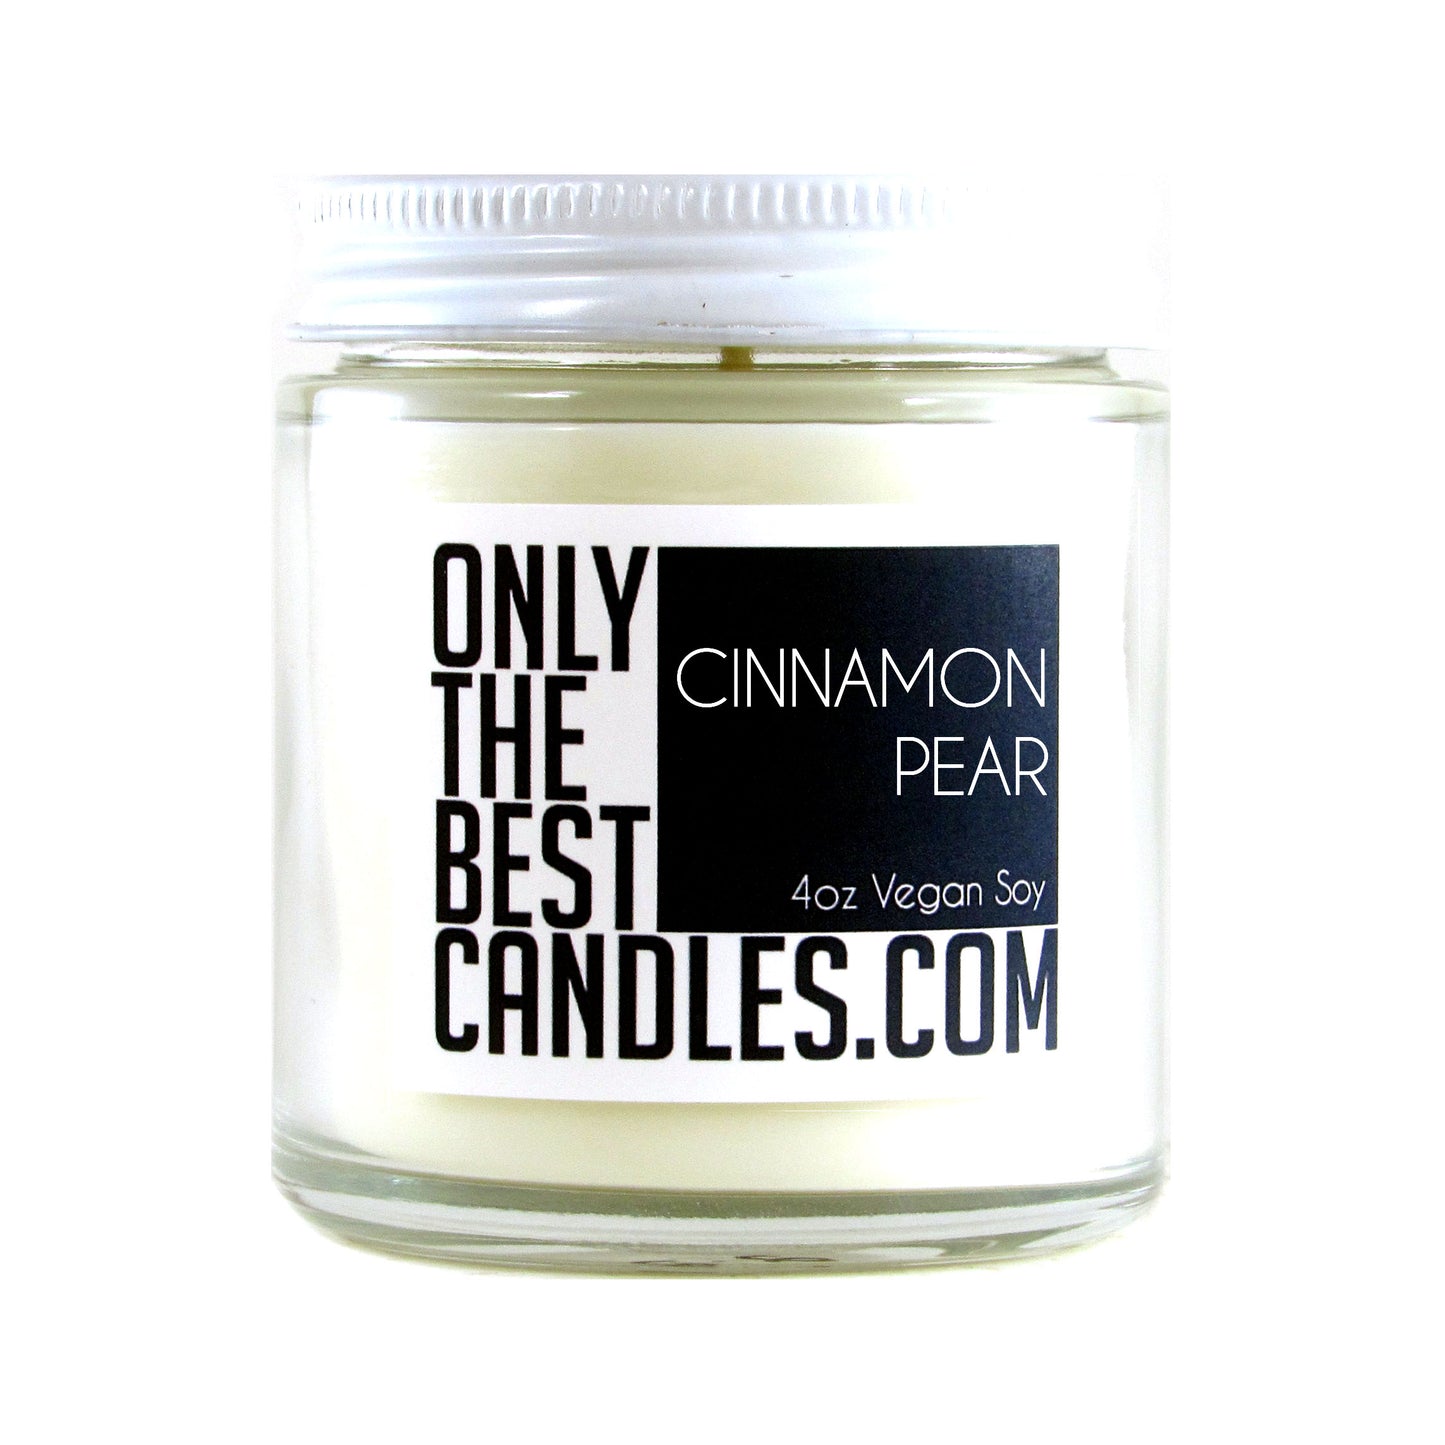 Cinnamon Pear 4oz Candle